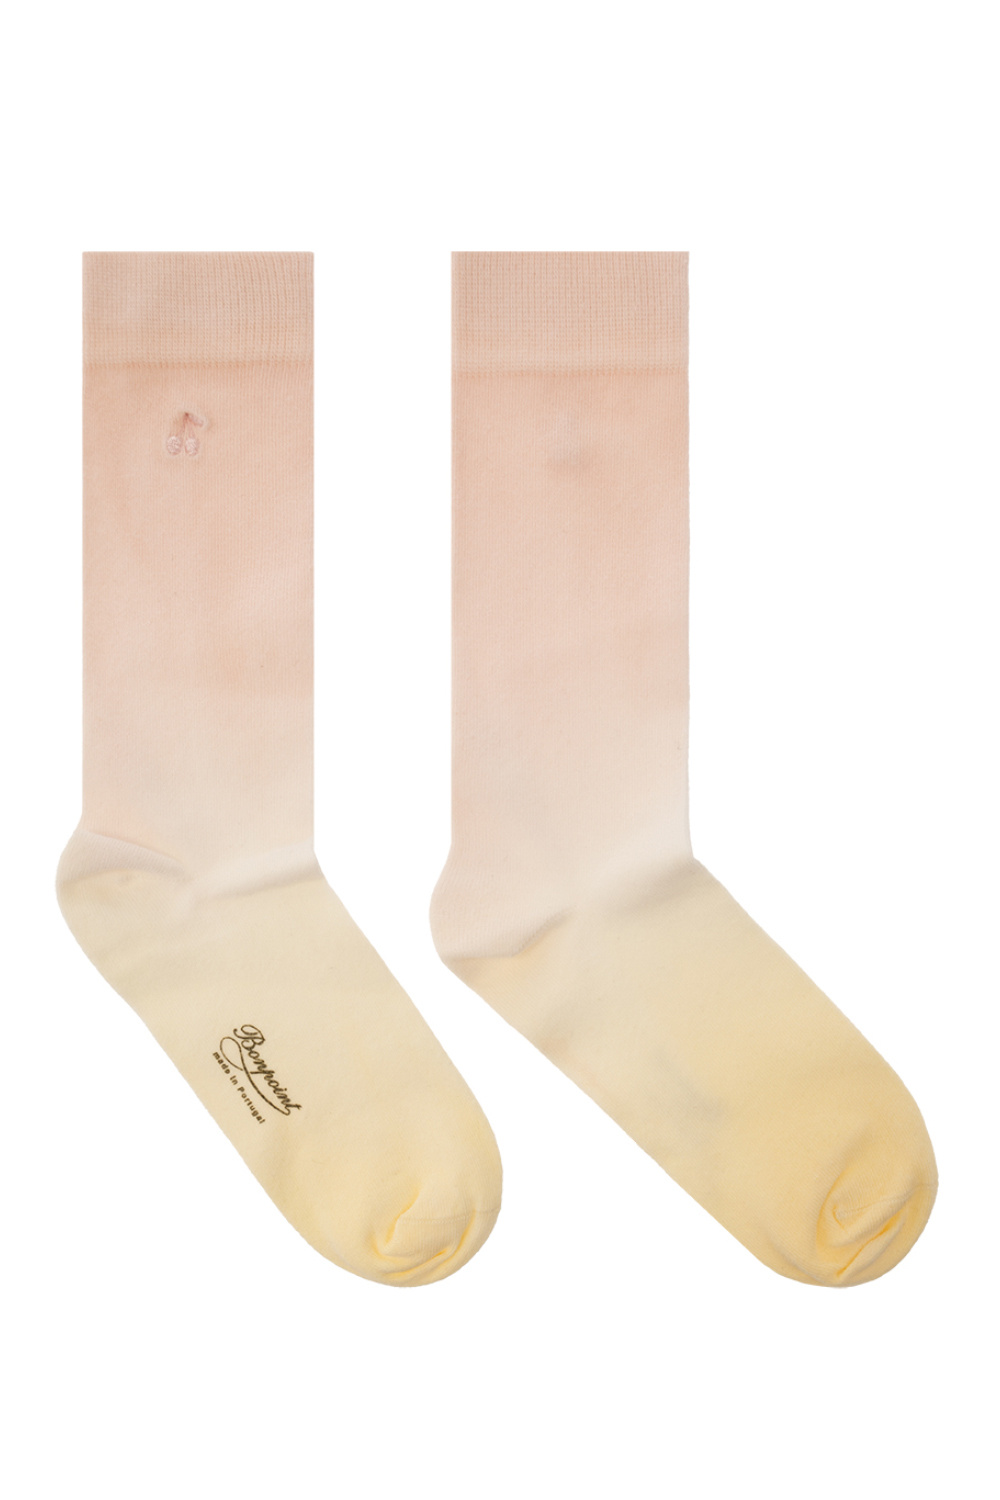 Bonpoint  Cotton socks with logo